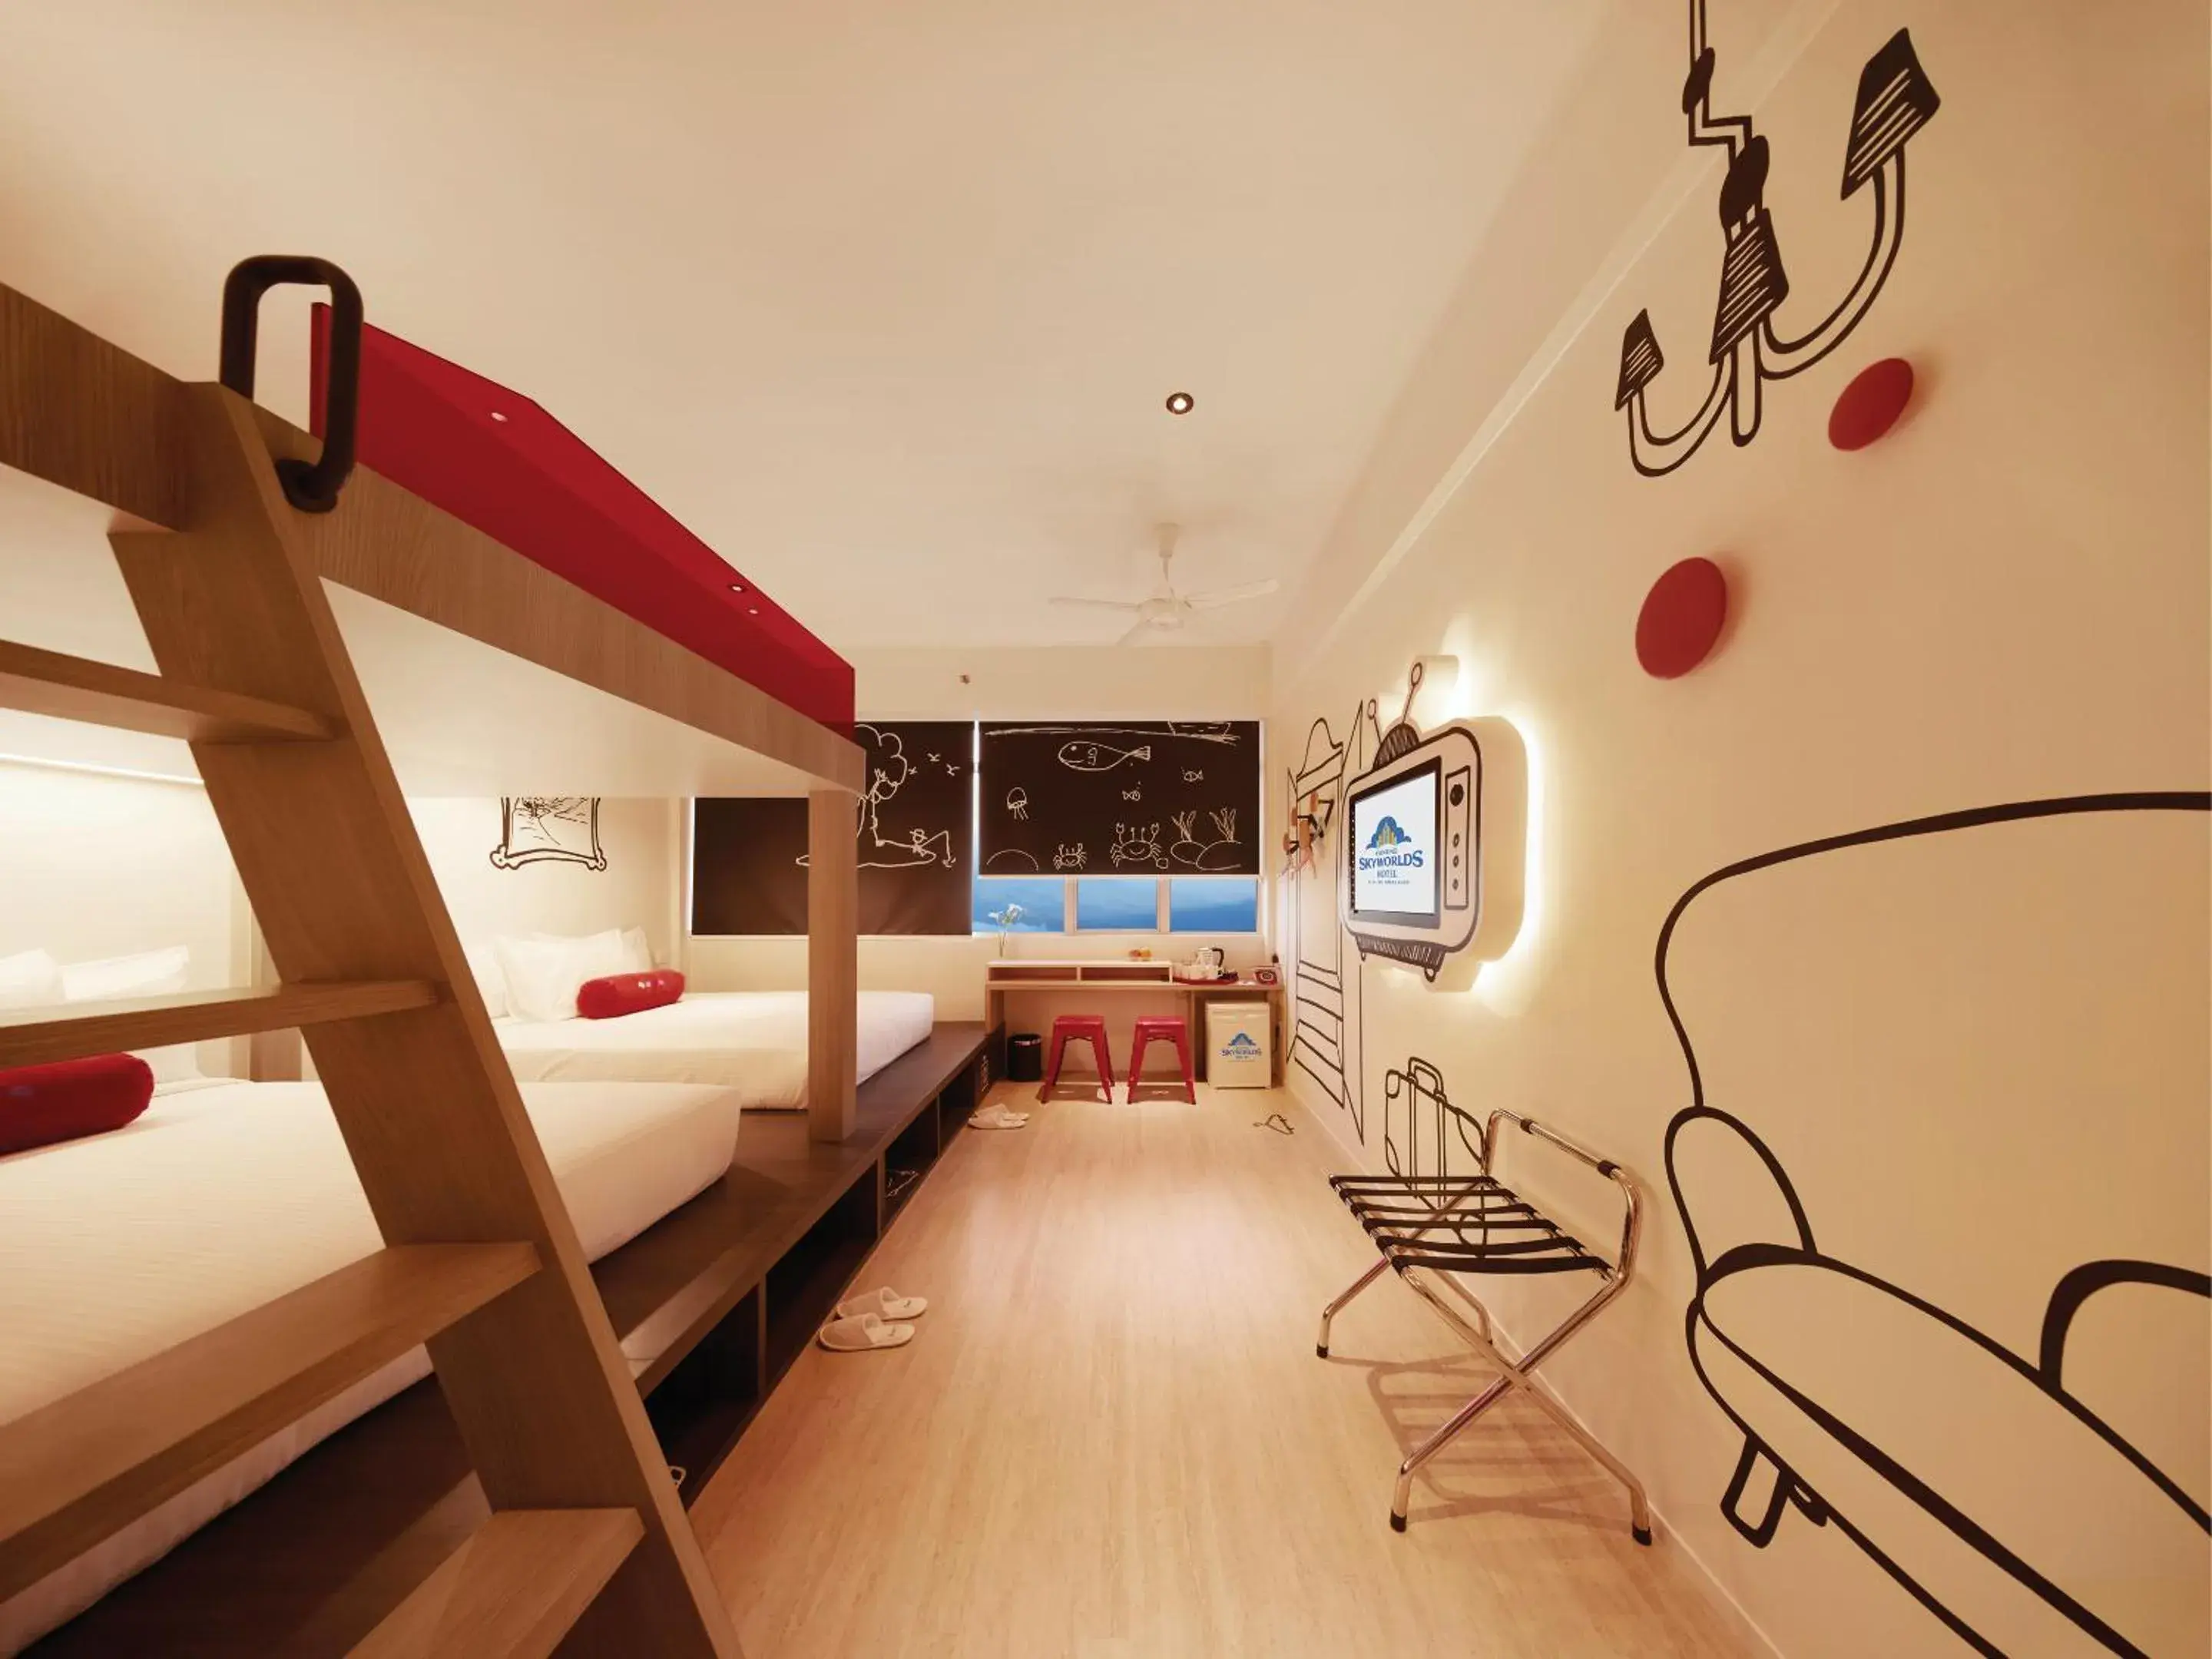 bunk bed in Resorts World Genting - Genting SkyWorlds Hotel